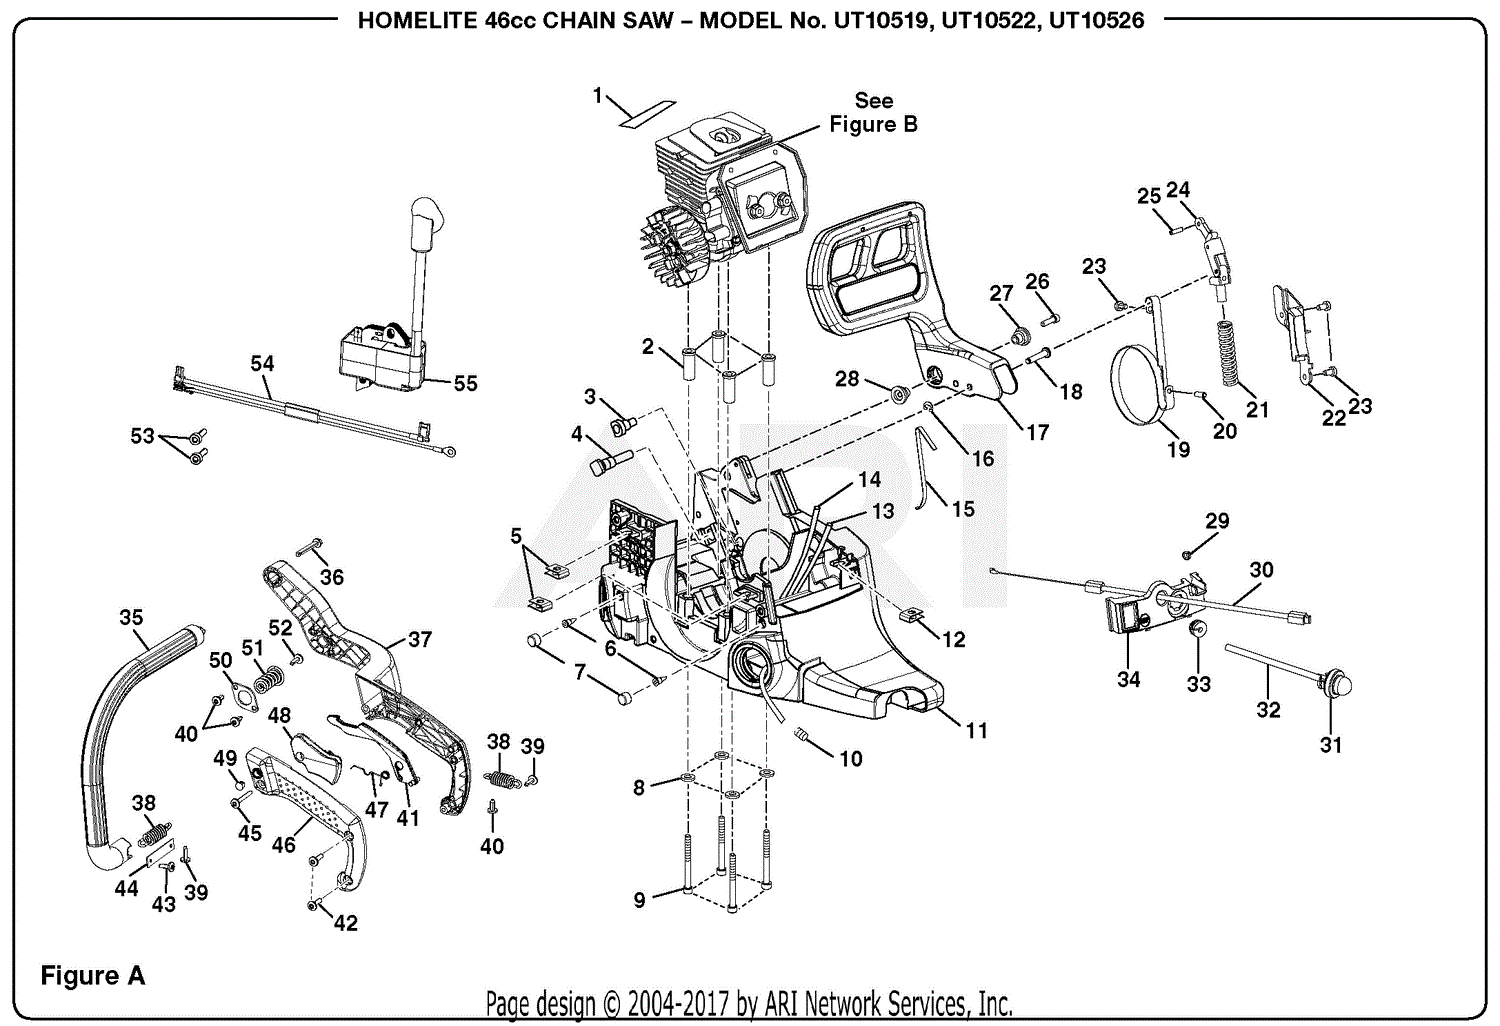 Homelite Ut10522 46cc Chain Saw Parts Diagram For Figure A